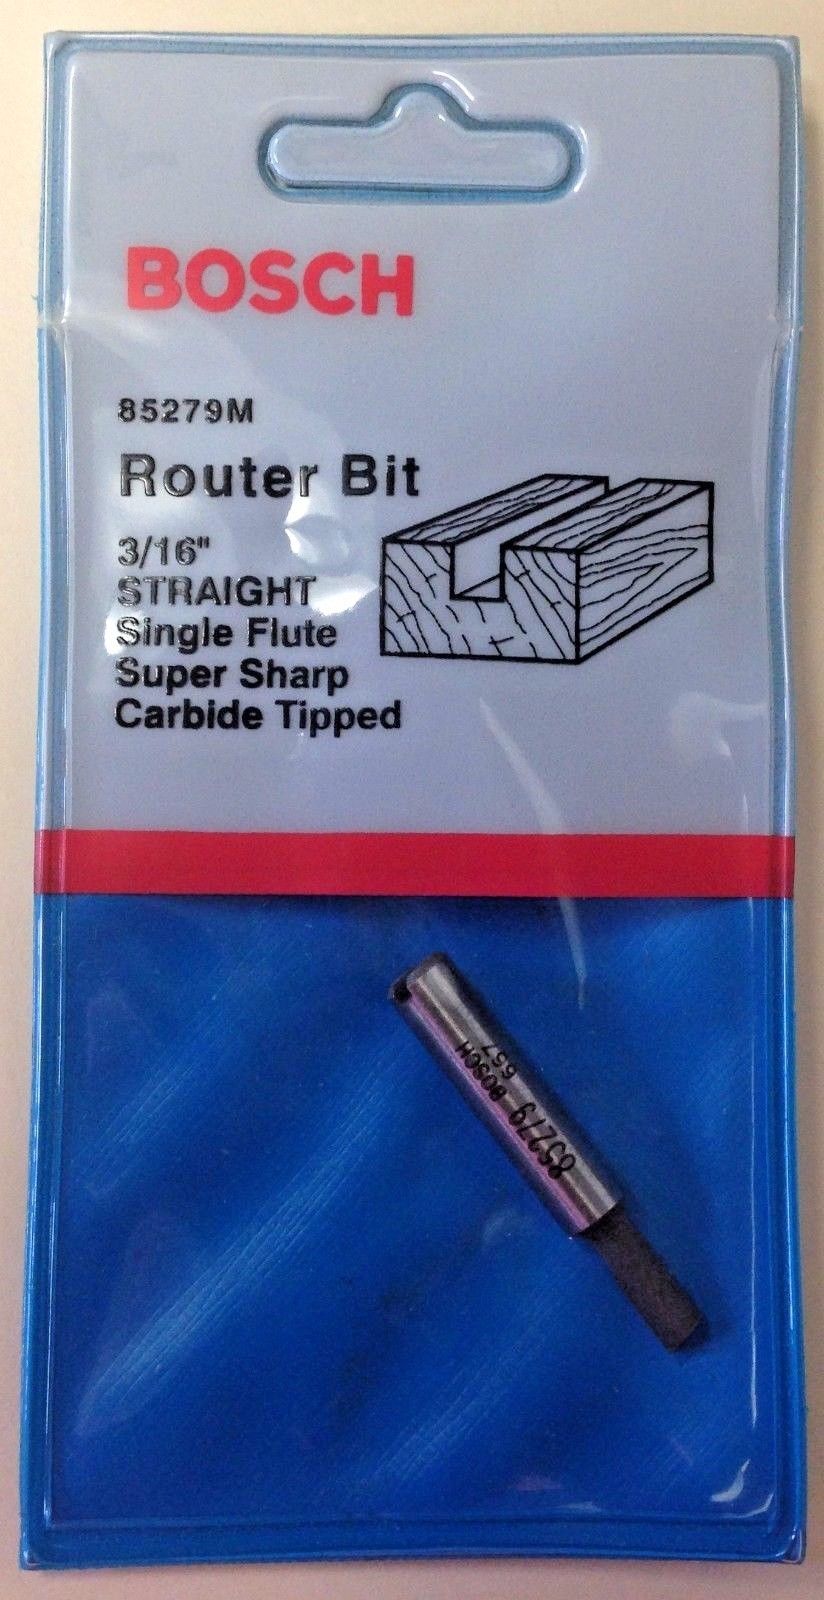 Bosch 85279M 3/16" Straight Single Flute Router Bit 1/4" Shank USA